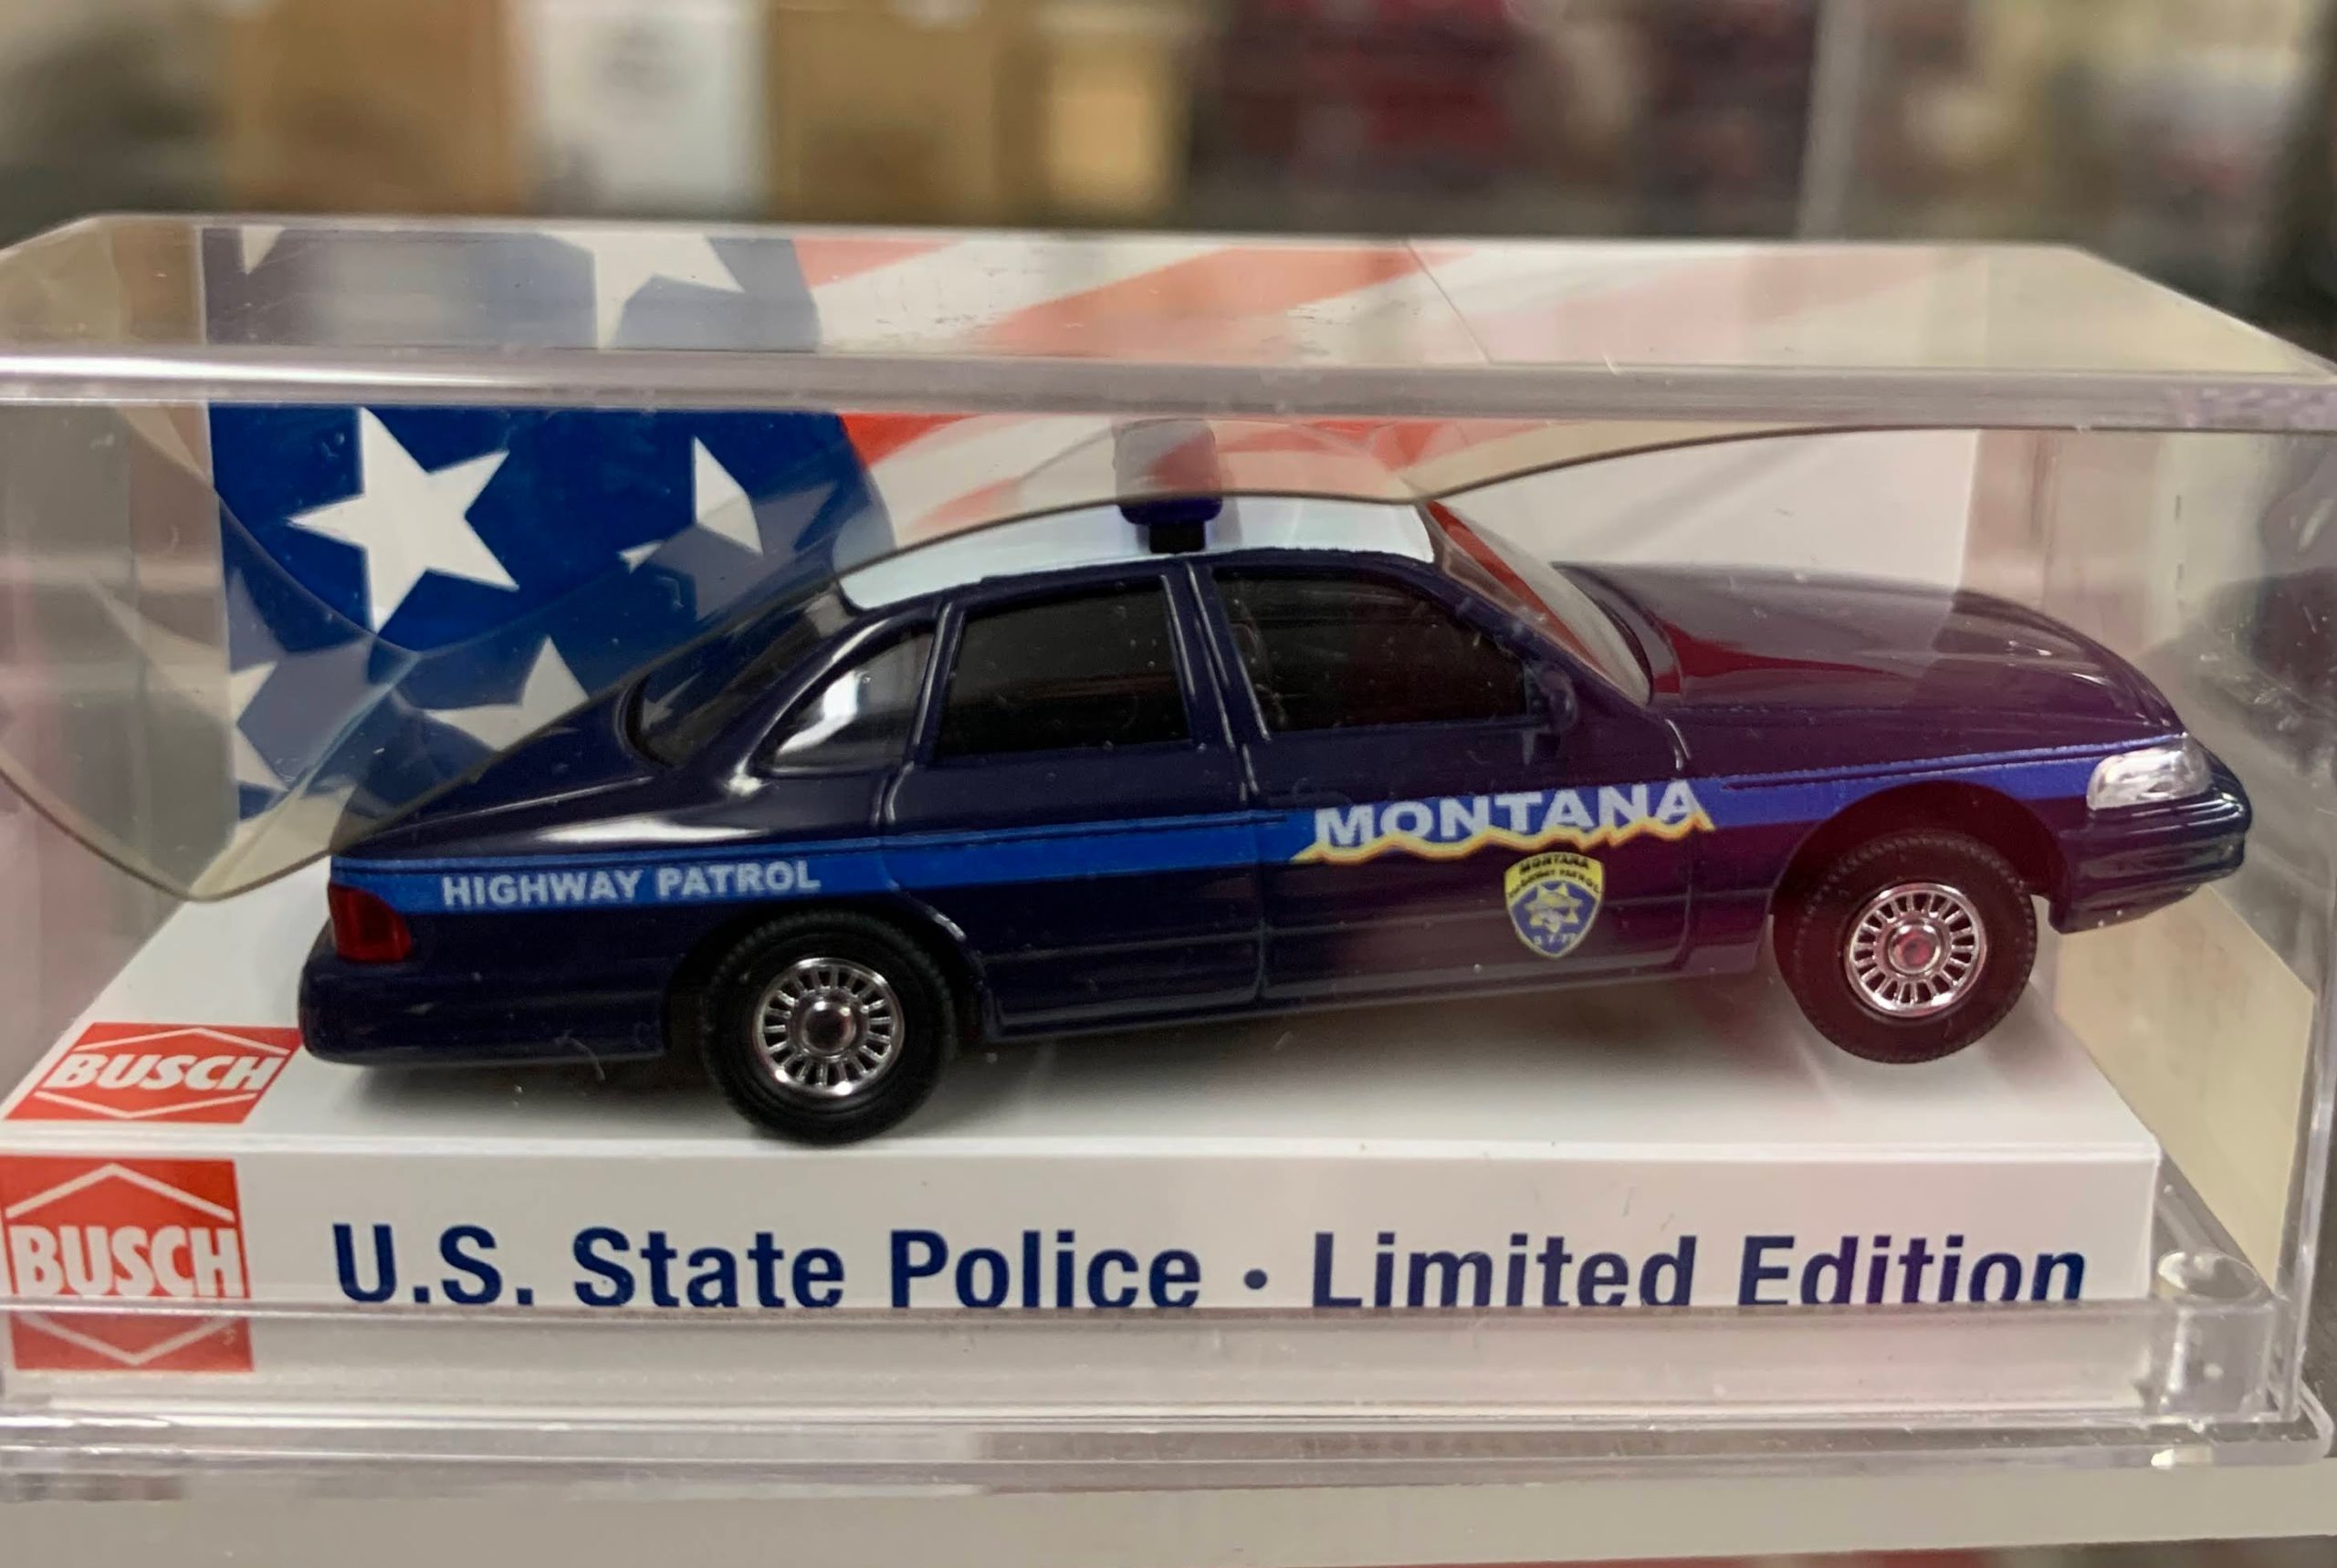 U.S. State Police Series - Montana